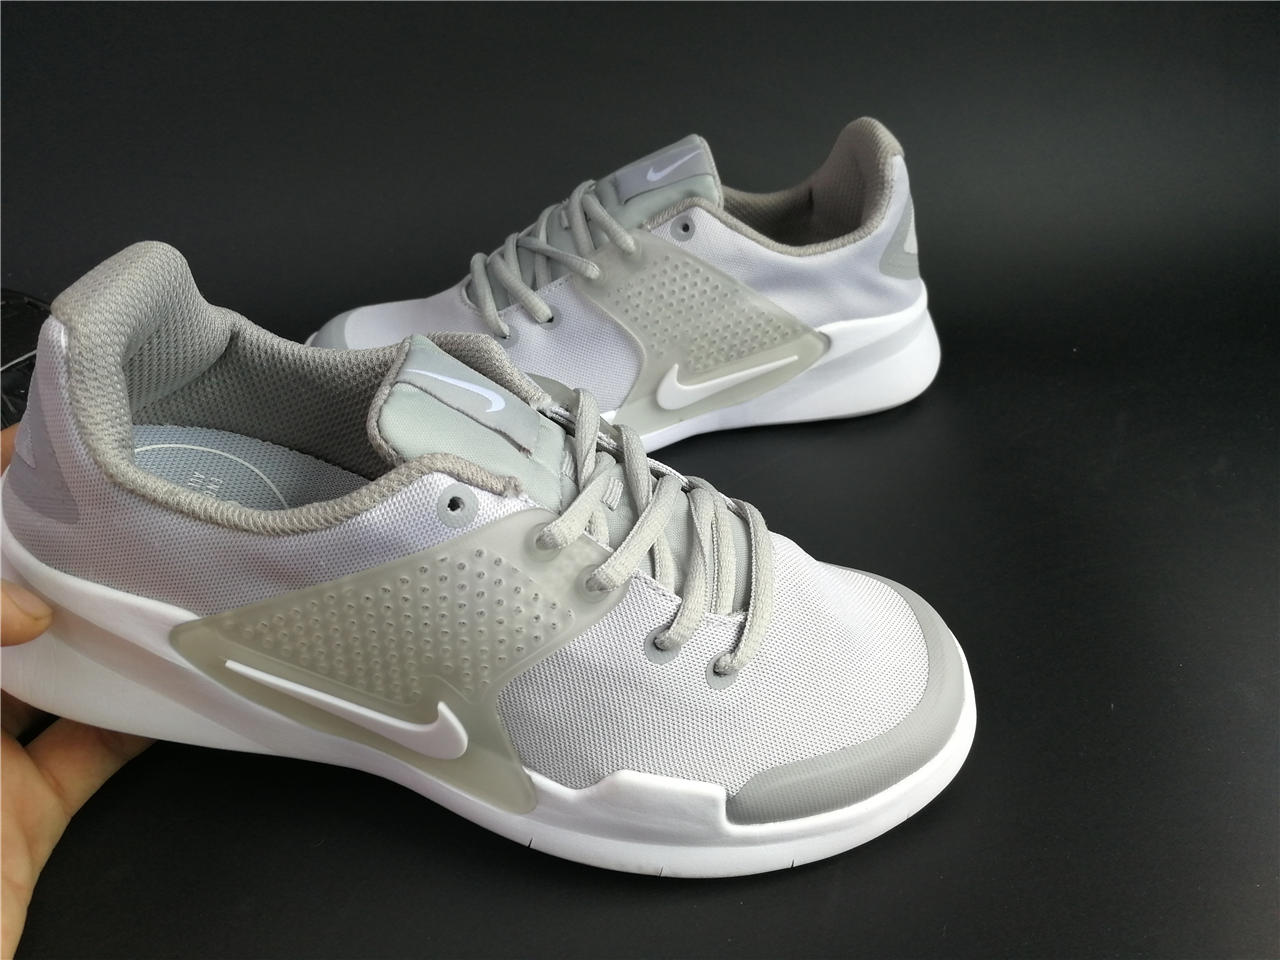 Nike Air Presto 4 Mesh Grey Silver Shoes